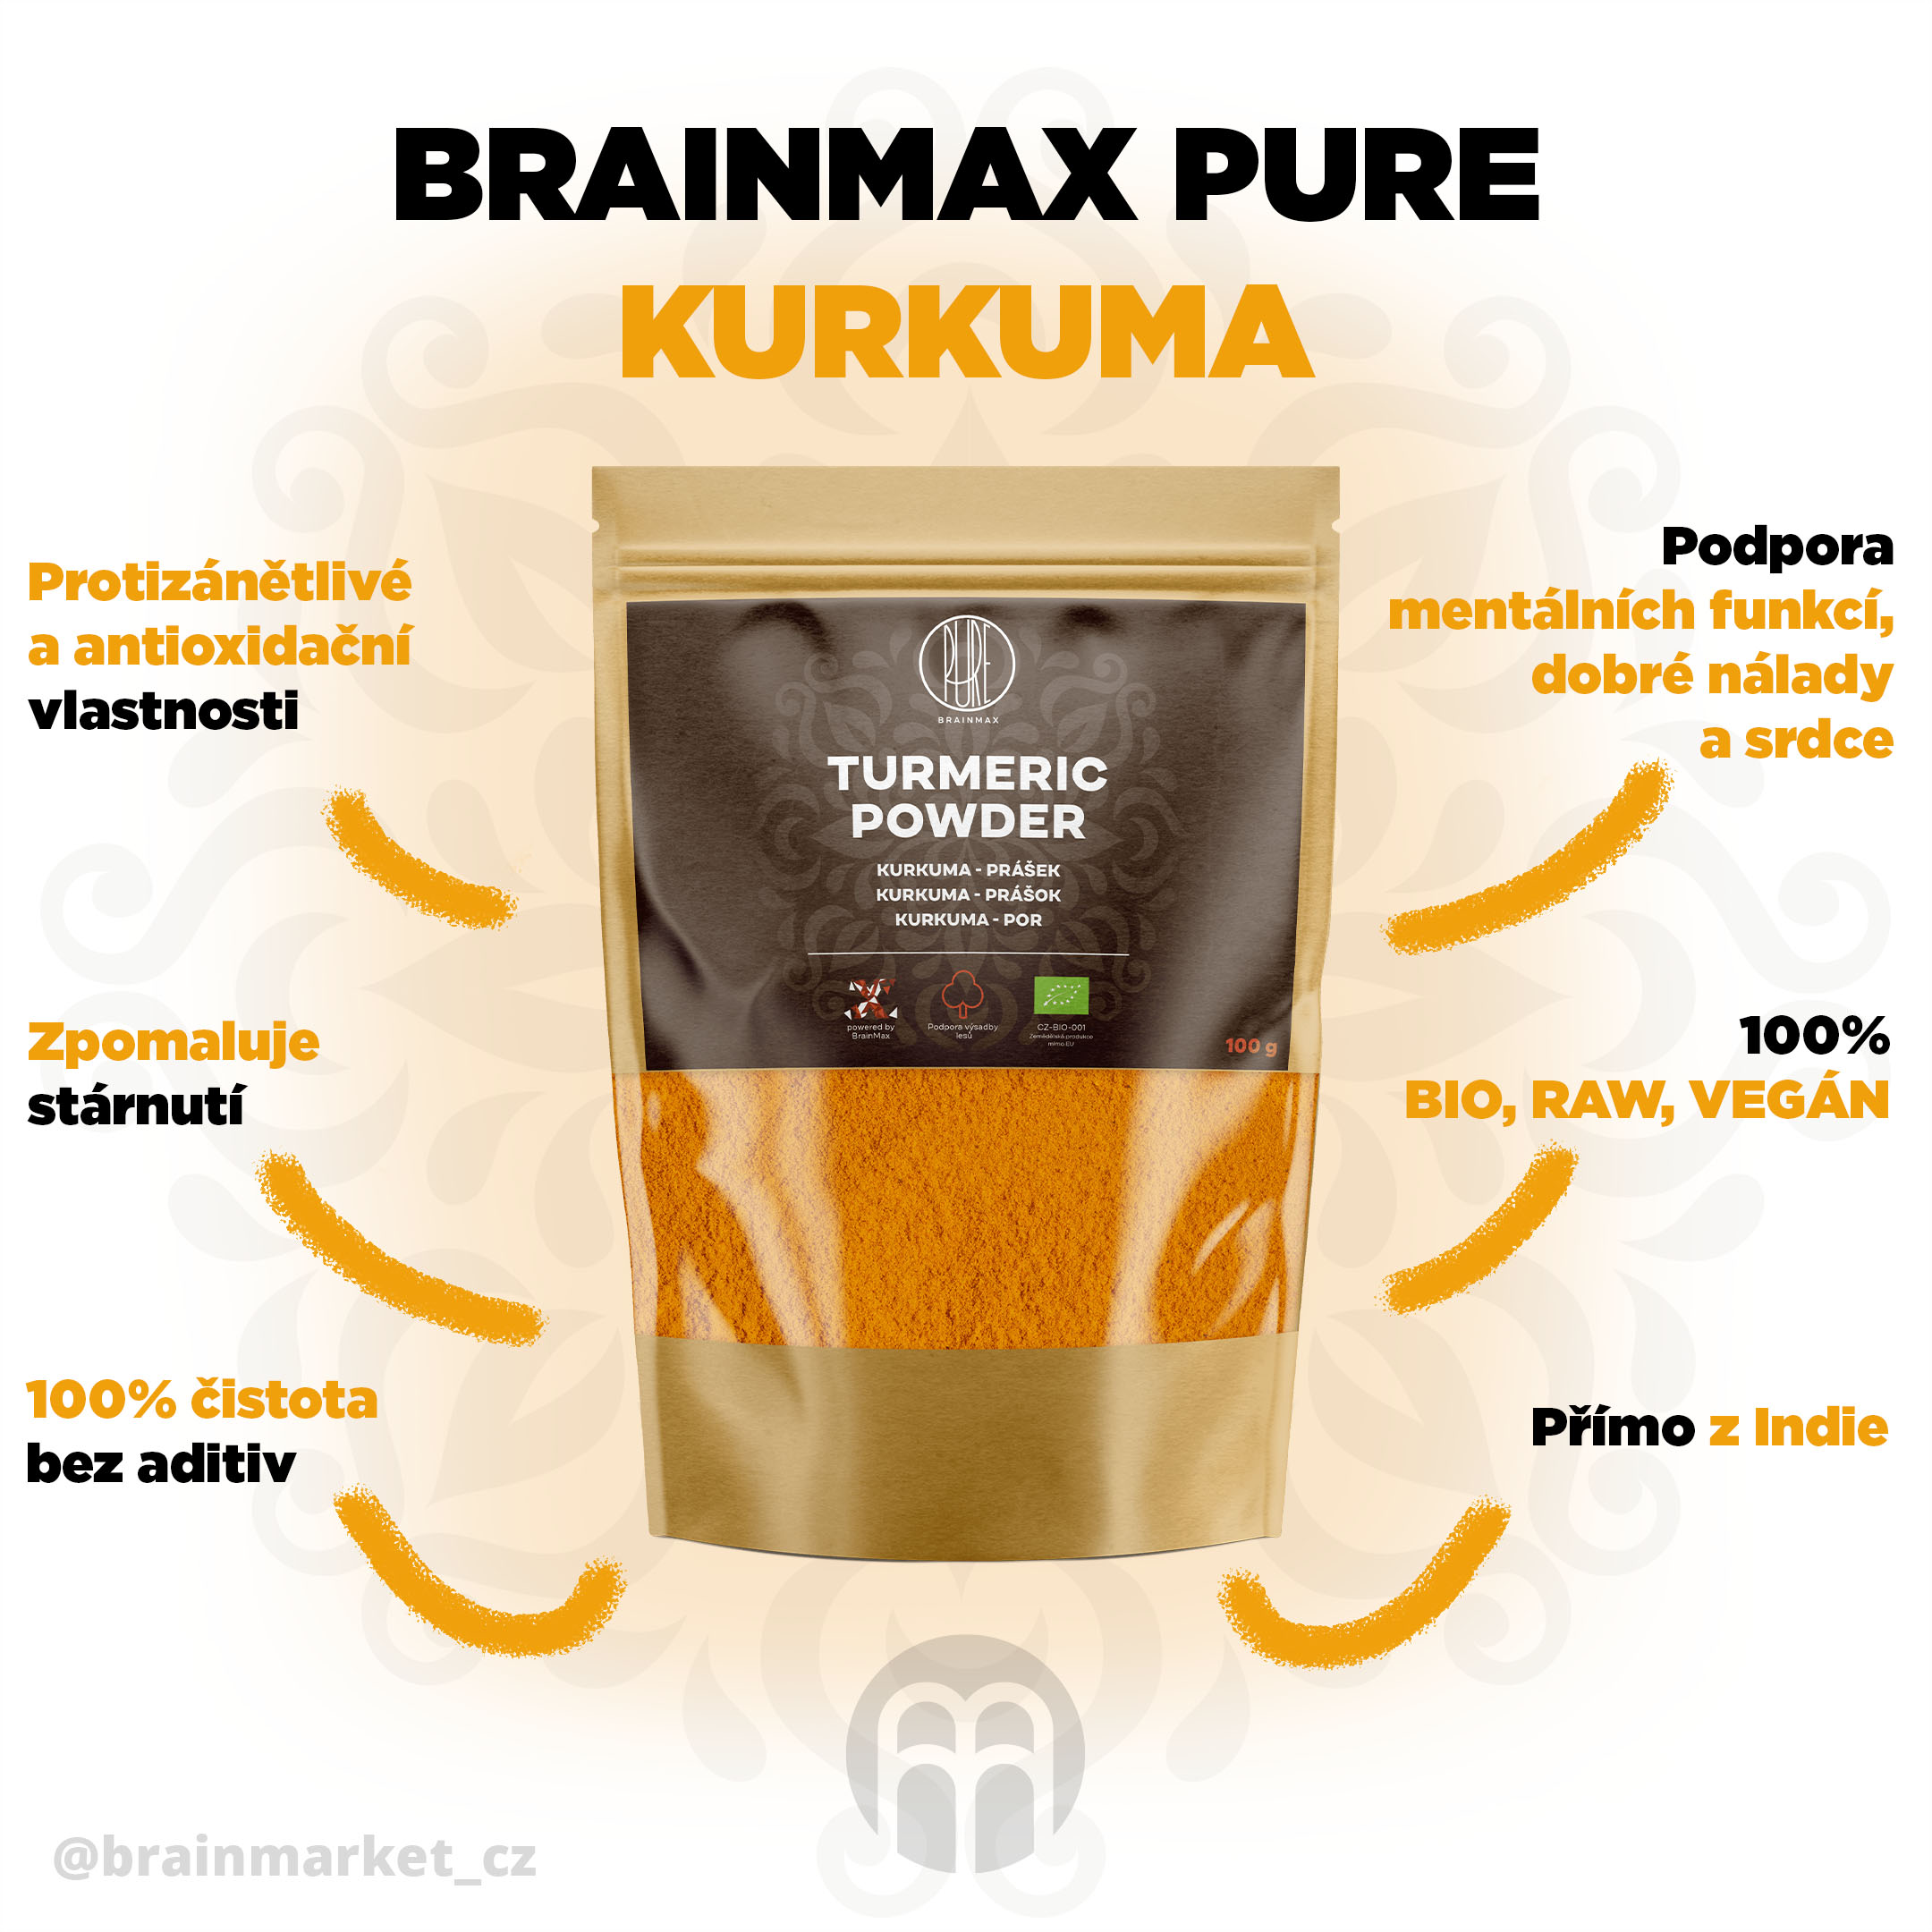 kurkuma-brainmax-pure-infografika-brainmarket-cz